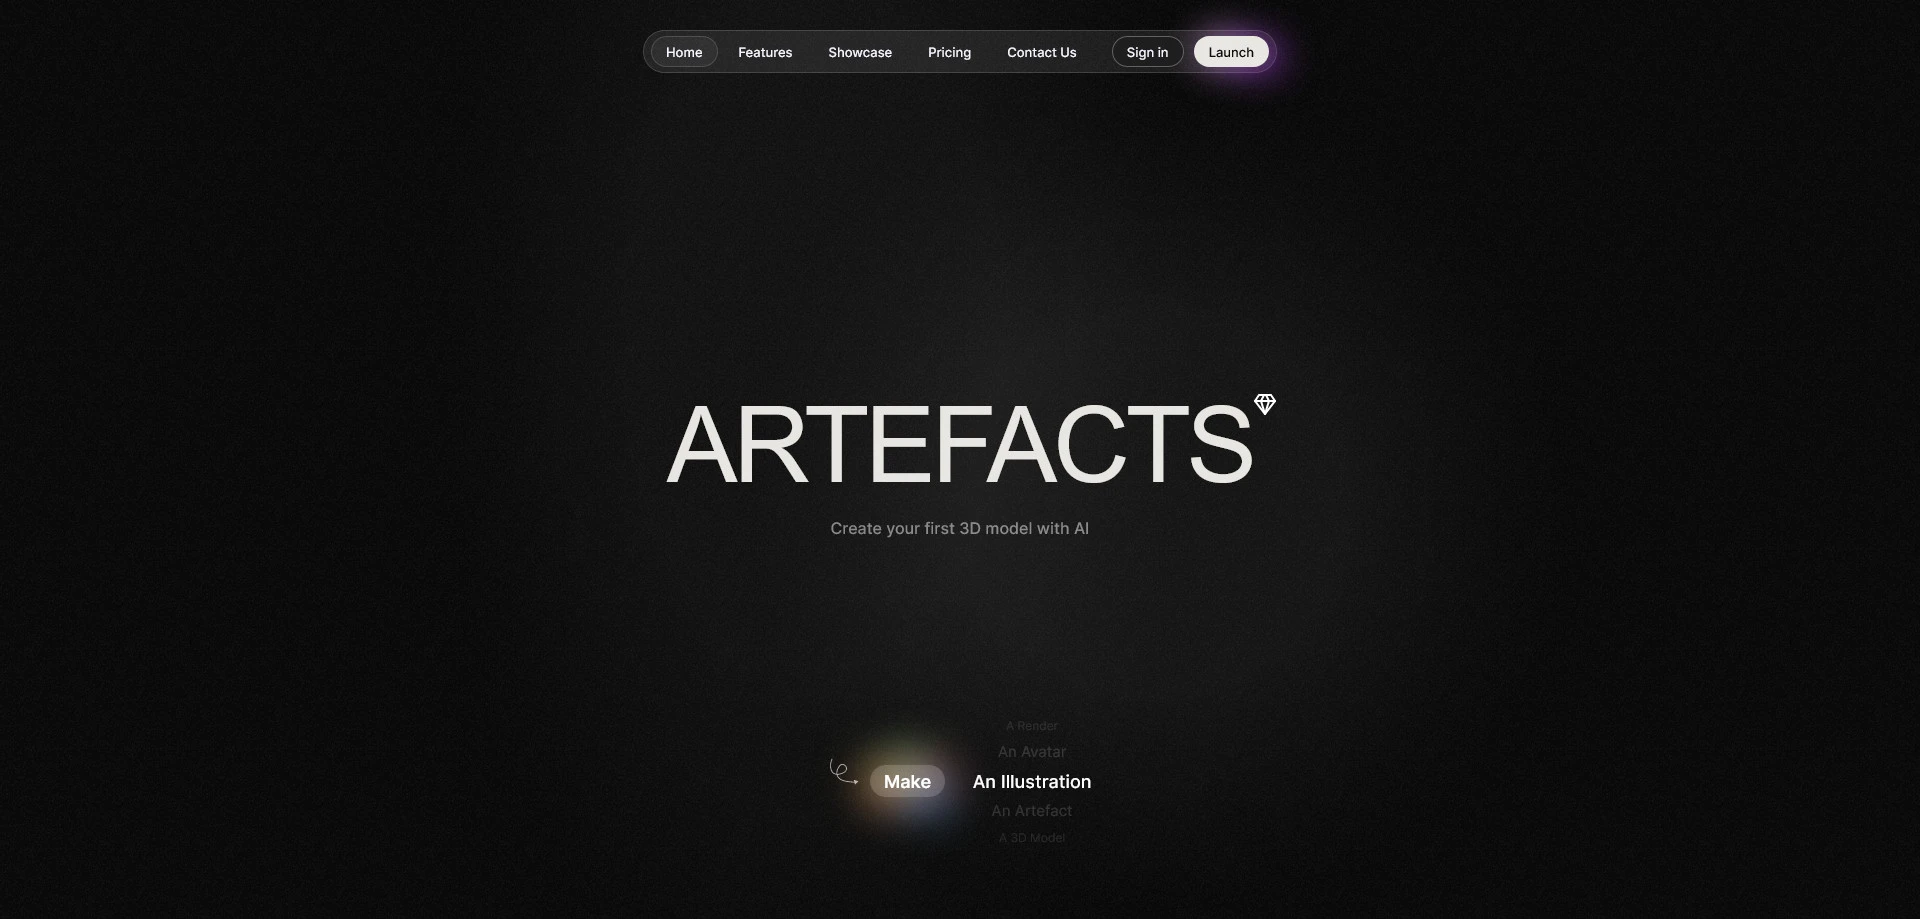 AI工具与服务推荐 - Artefacts.AI - AI辅助设计平台 - 特色图片